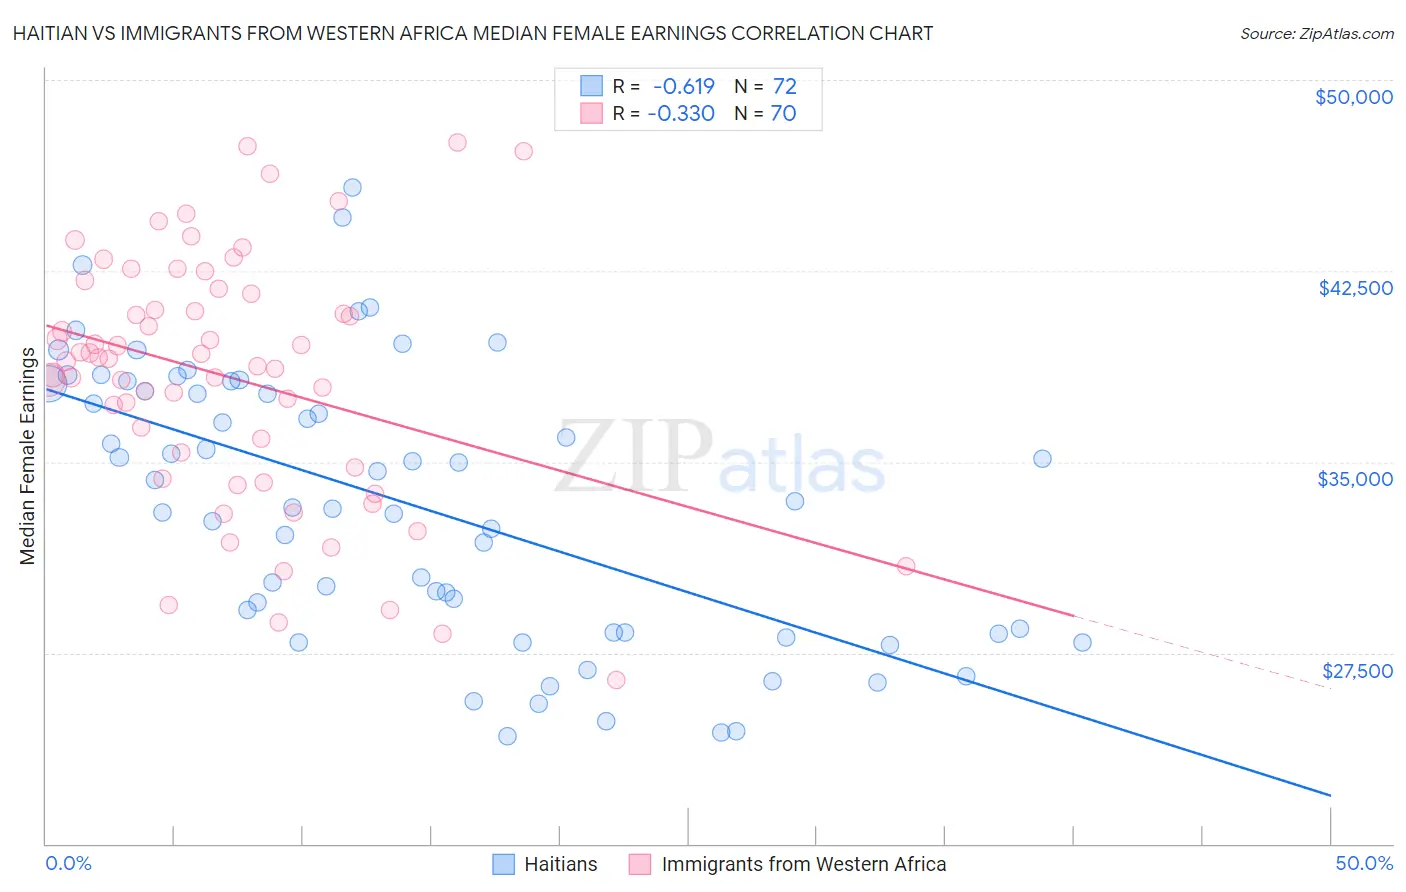 Haitian vs Immigrants from Western Africa Median Female Earnings